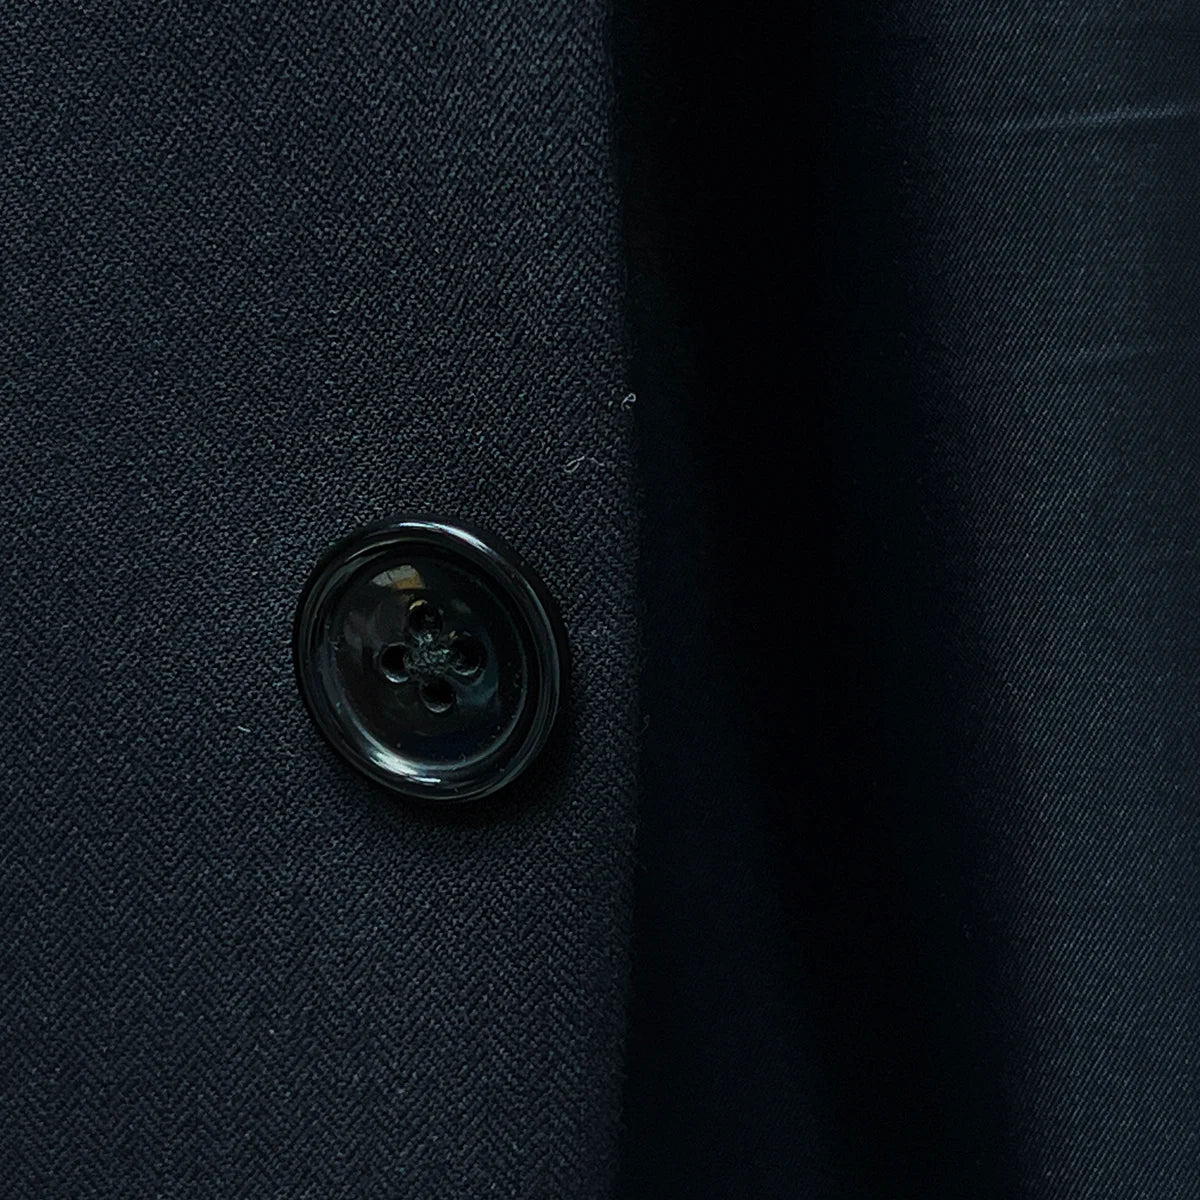 Elegant horn marble buttons enhancing the black herringbone fabric.